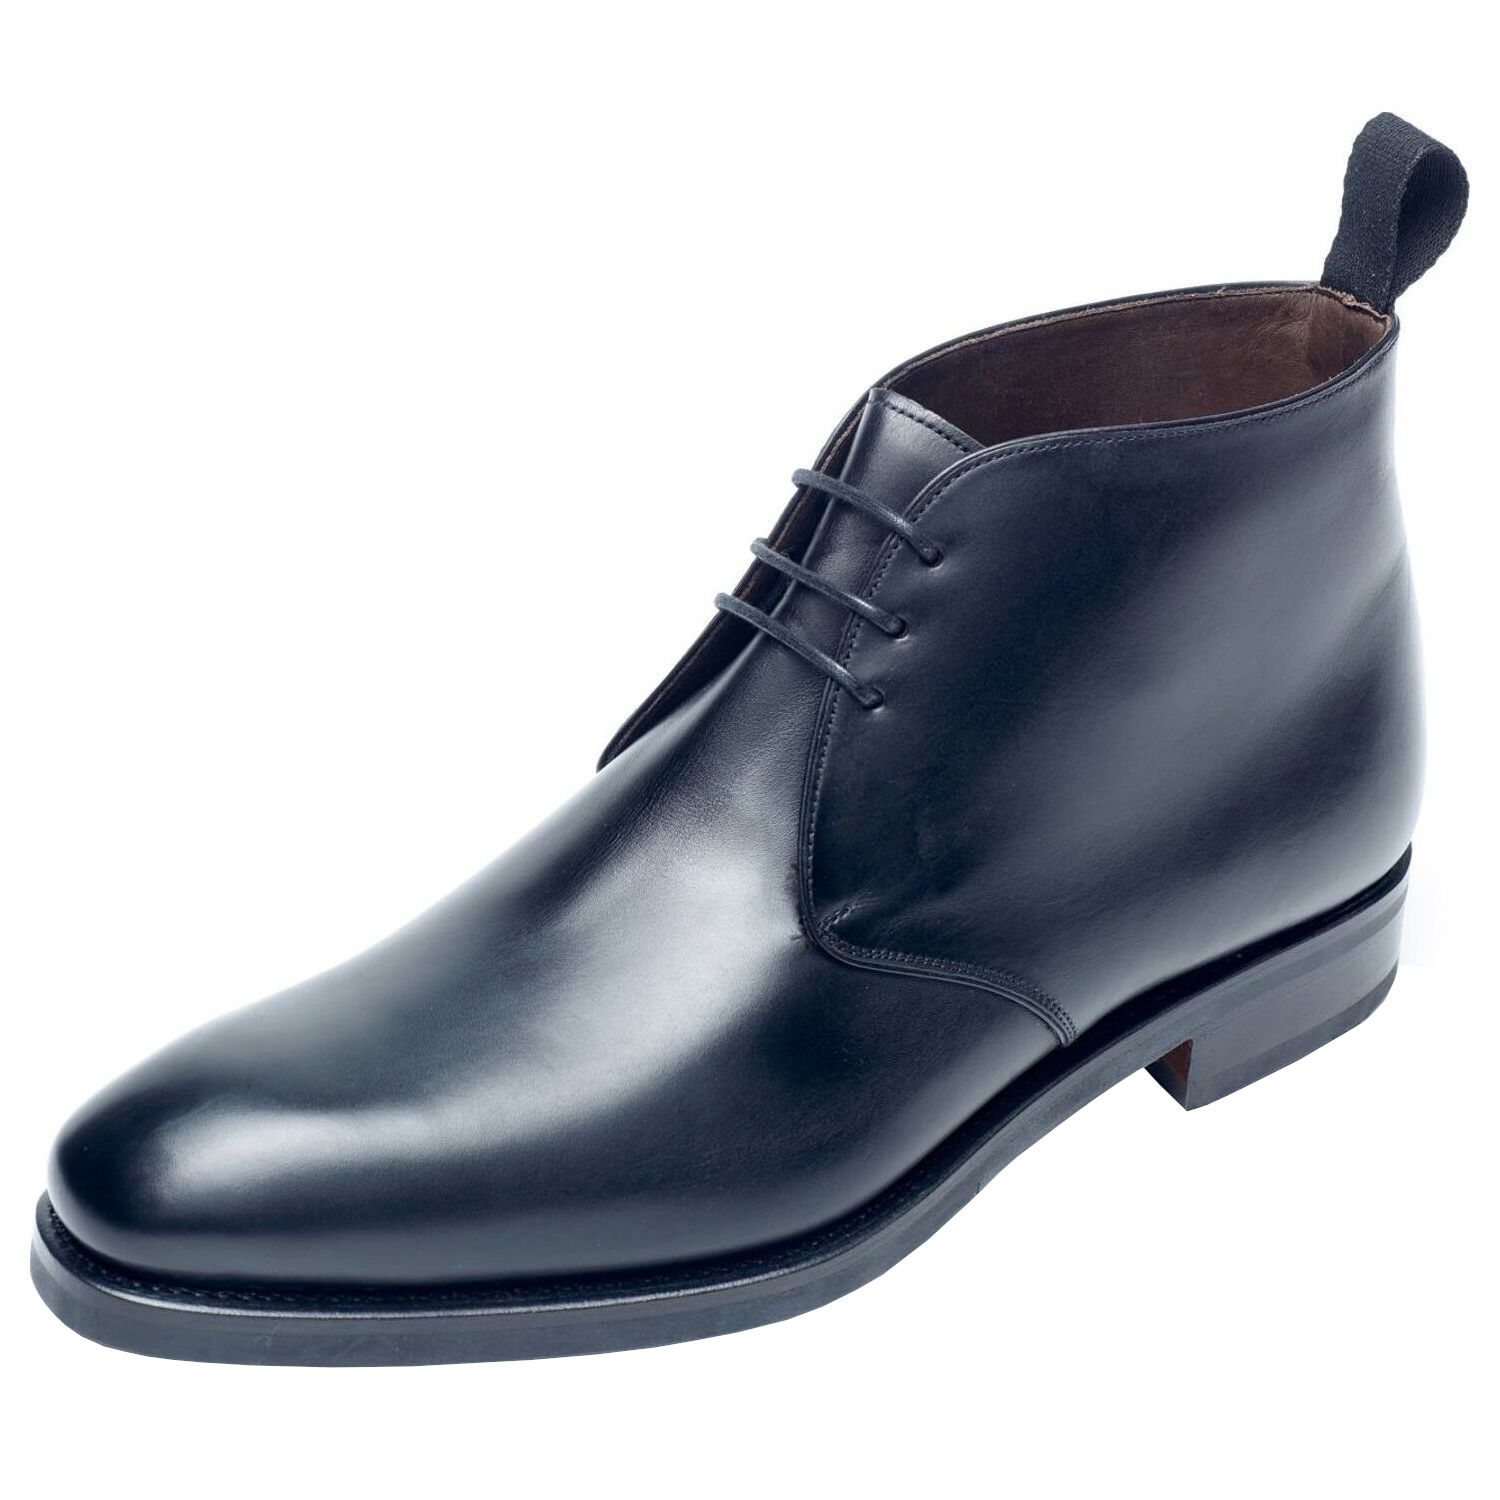 Carmina Ruben Calf 10027 - Pediwear Footwear